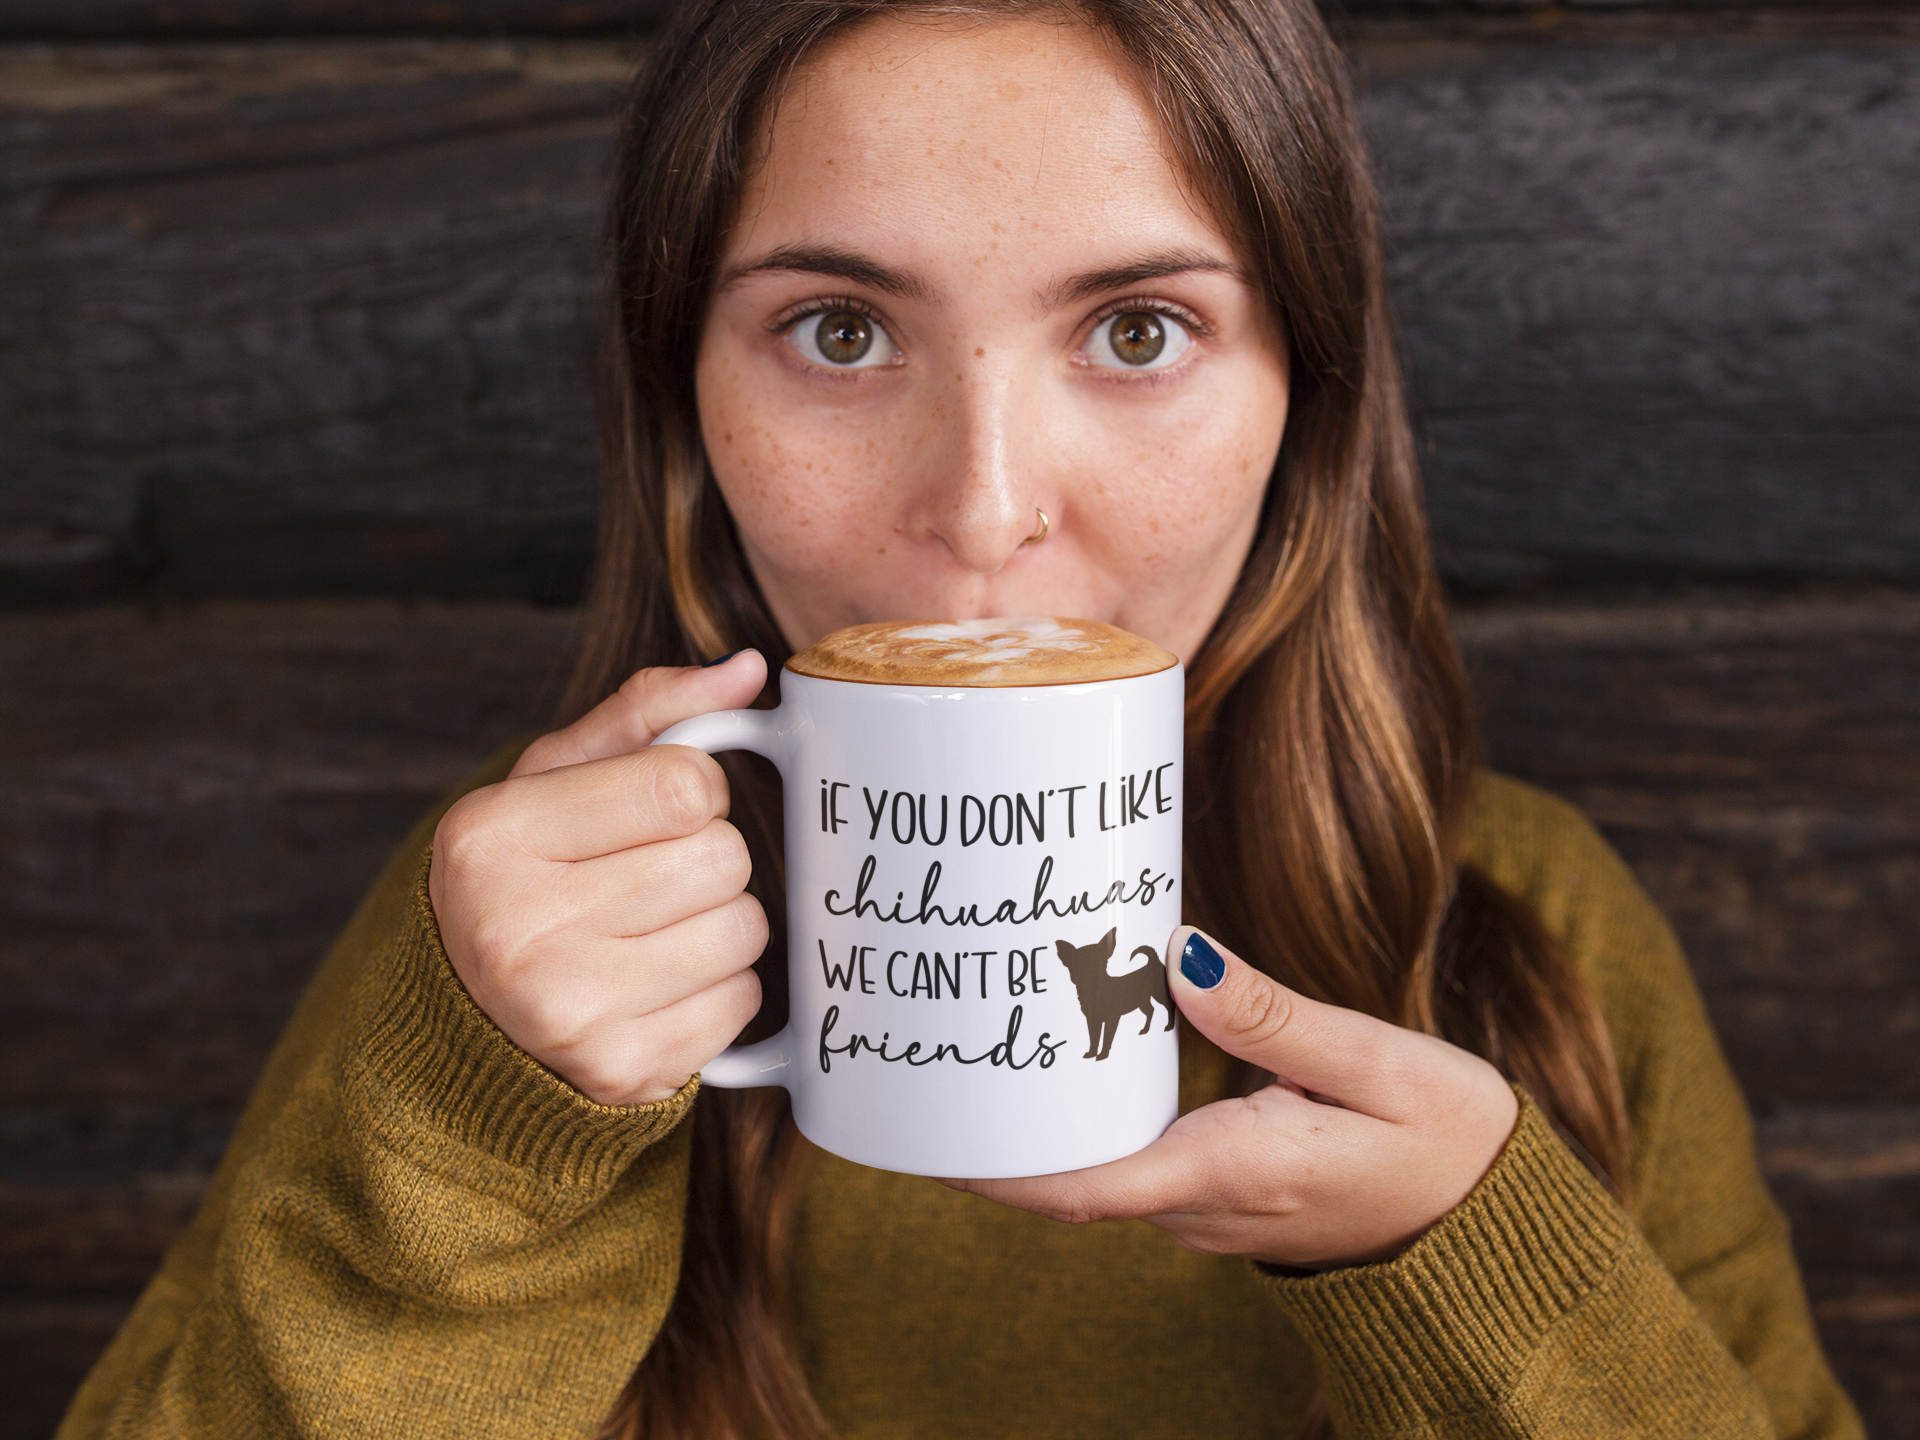 Funny coffee mugs